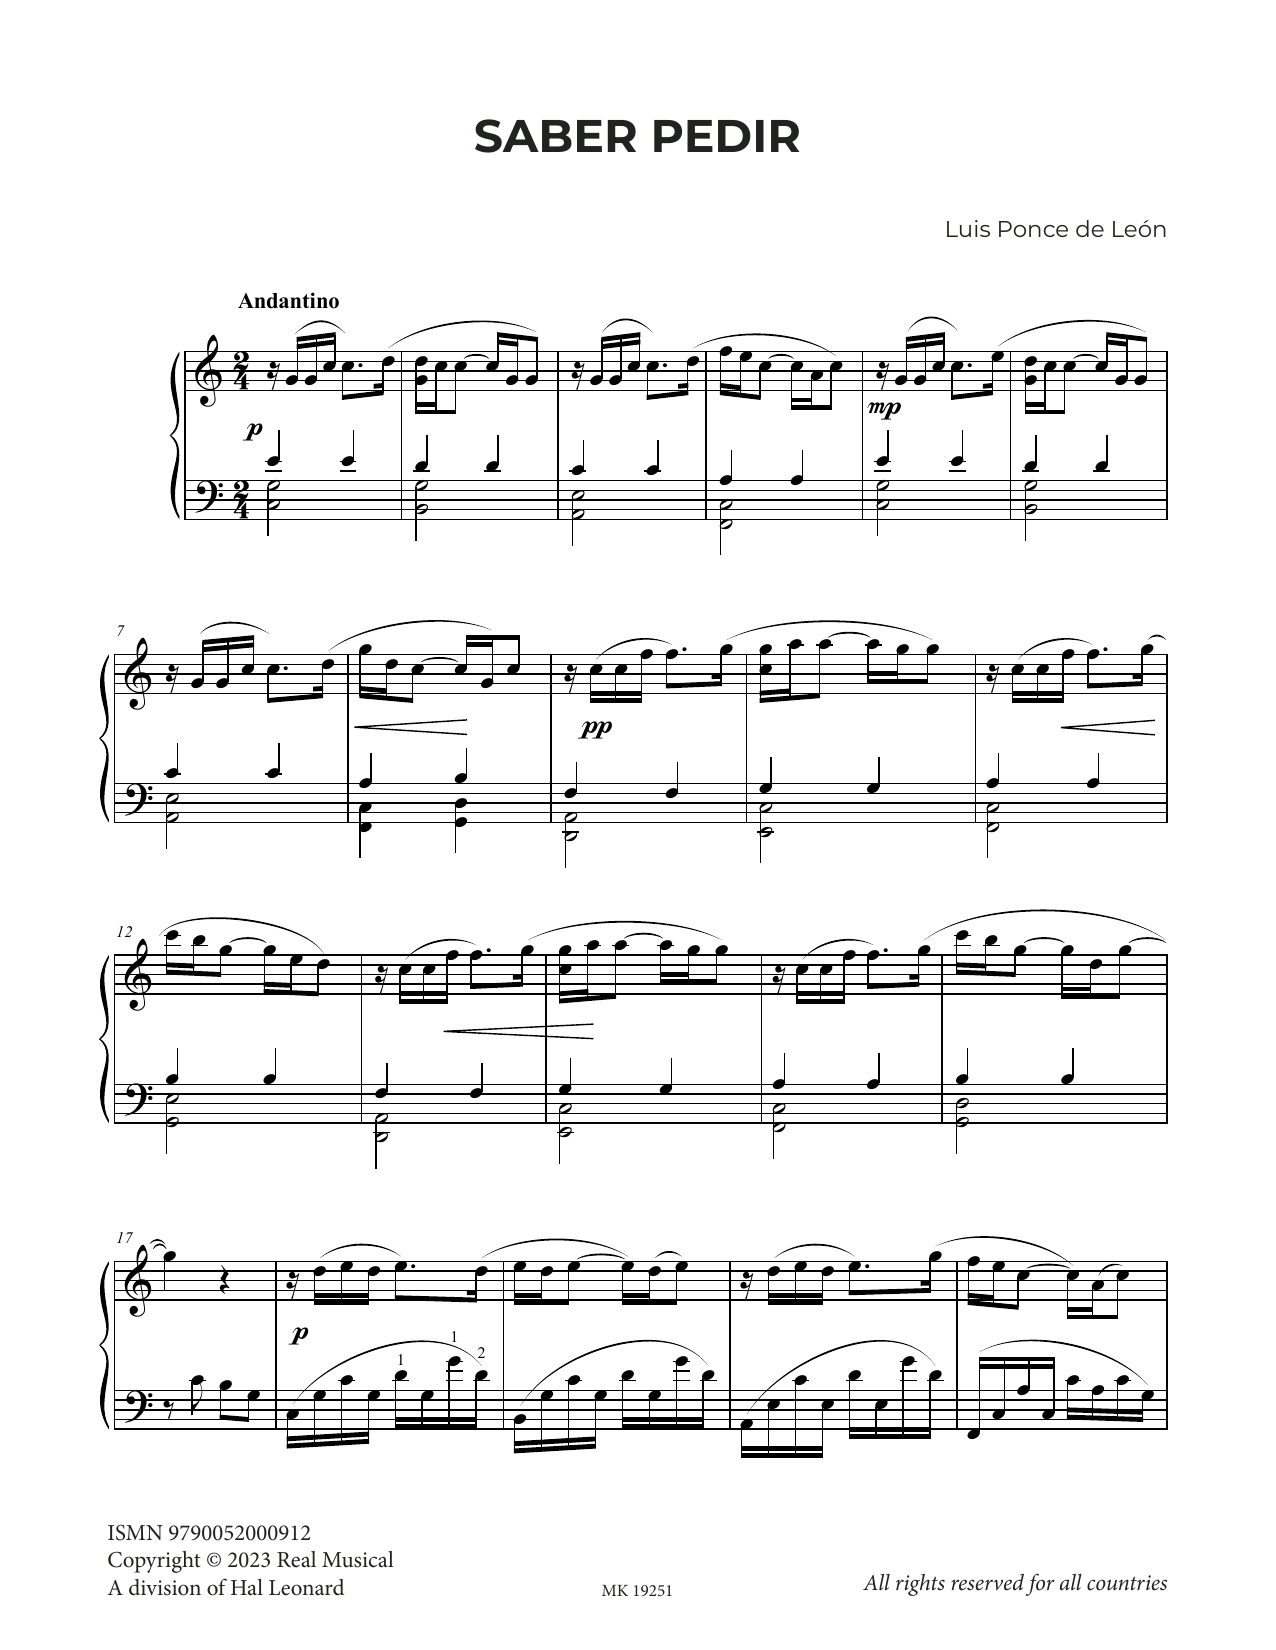 Luis Ponce de León Saber pedir Sheet Music Notes & Chords for Piano Solo - Download or Print PDF